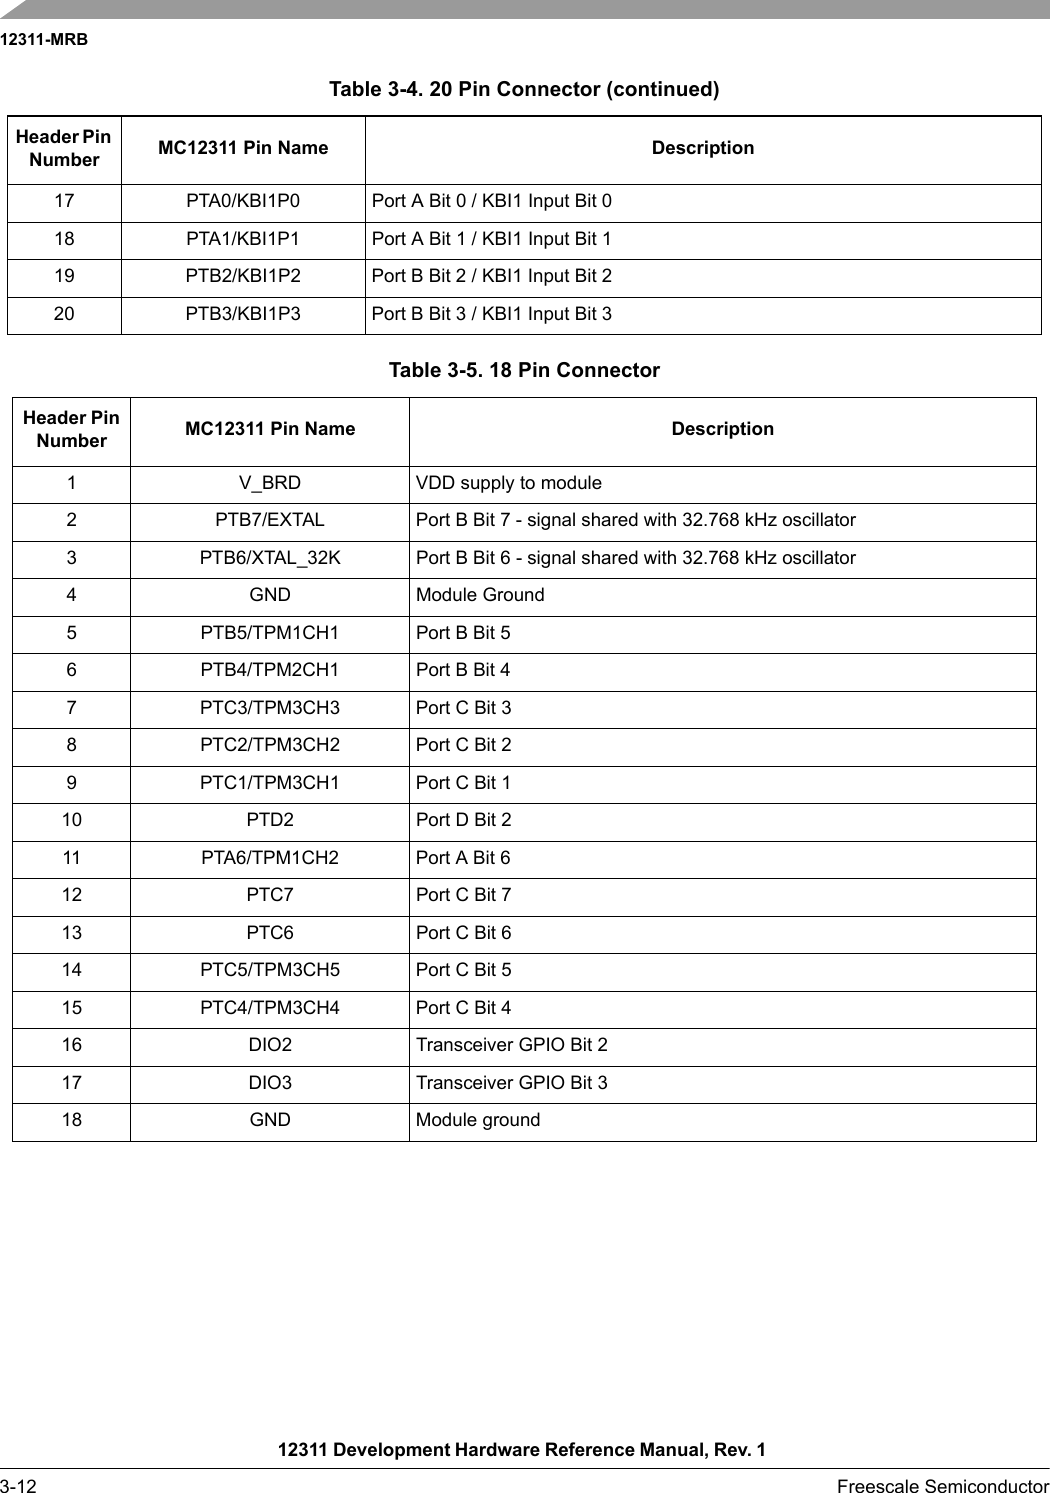 12311-MRB12311 Development Hardware Reference Manual, Rev. 1 3-12 Freescale Semiconductor17 PTA0/KBI1P0 Port A Bit 0 / KBI1 Input Bit 018 PTA1/KBI1P1 Port A Bit 1 / KBI1 Input Bit 119 PTB2/KBI1P2 Port B Bit 2 / KBI1 Input Bit 220 PTB3/KBI1P3 Port B Bit 3 / KBI1 Input Bit 3Table 3-5. 18 Pin ConnectorHeader Pin Number MC12311 Pin Name Description1 V_BRD VDD supply to module2 PTB7/EXTAL Port B Bit 7 - signal shared with 32.768 kHz oscillator3 PTB6/XTAL_32K Port B Bit 6 - signal shared with 32.768 kHz oscillator4 GND Module Ground5 PTB5/TPM1CH1 Port B Bit 5 6 PTB4/TPM2CH1 Port B Bit 47 PTC3/TPM3CH3 Port C Bit 38 PTC2/TPM3CH2 Port C Bit 2 9 PTC1/TPM3CH1 Port C Bit 110 PTD2 Port D Bit 211 PTA6/TPM1CH2 Port A Bit 612 PTC7 Port C Bit 713 PTC6 Port C Bit 614 PTC5/TPM3CH5 Port C Bit 515 PTC4/TPM3CH4 Port C Bit 416 DIO2 Transceiver GPIO Bit 217 DIO3 Transceiver GPIO Bit 318 GND Module ground Table 3-4. 20 Pin Connector (continued)Header Pin Number MC12311 Pin Name Description